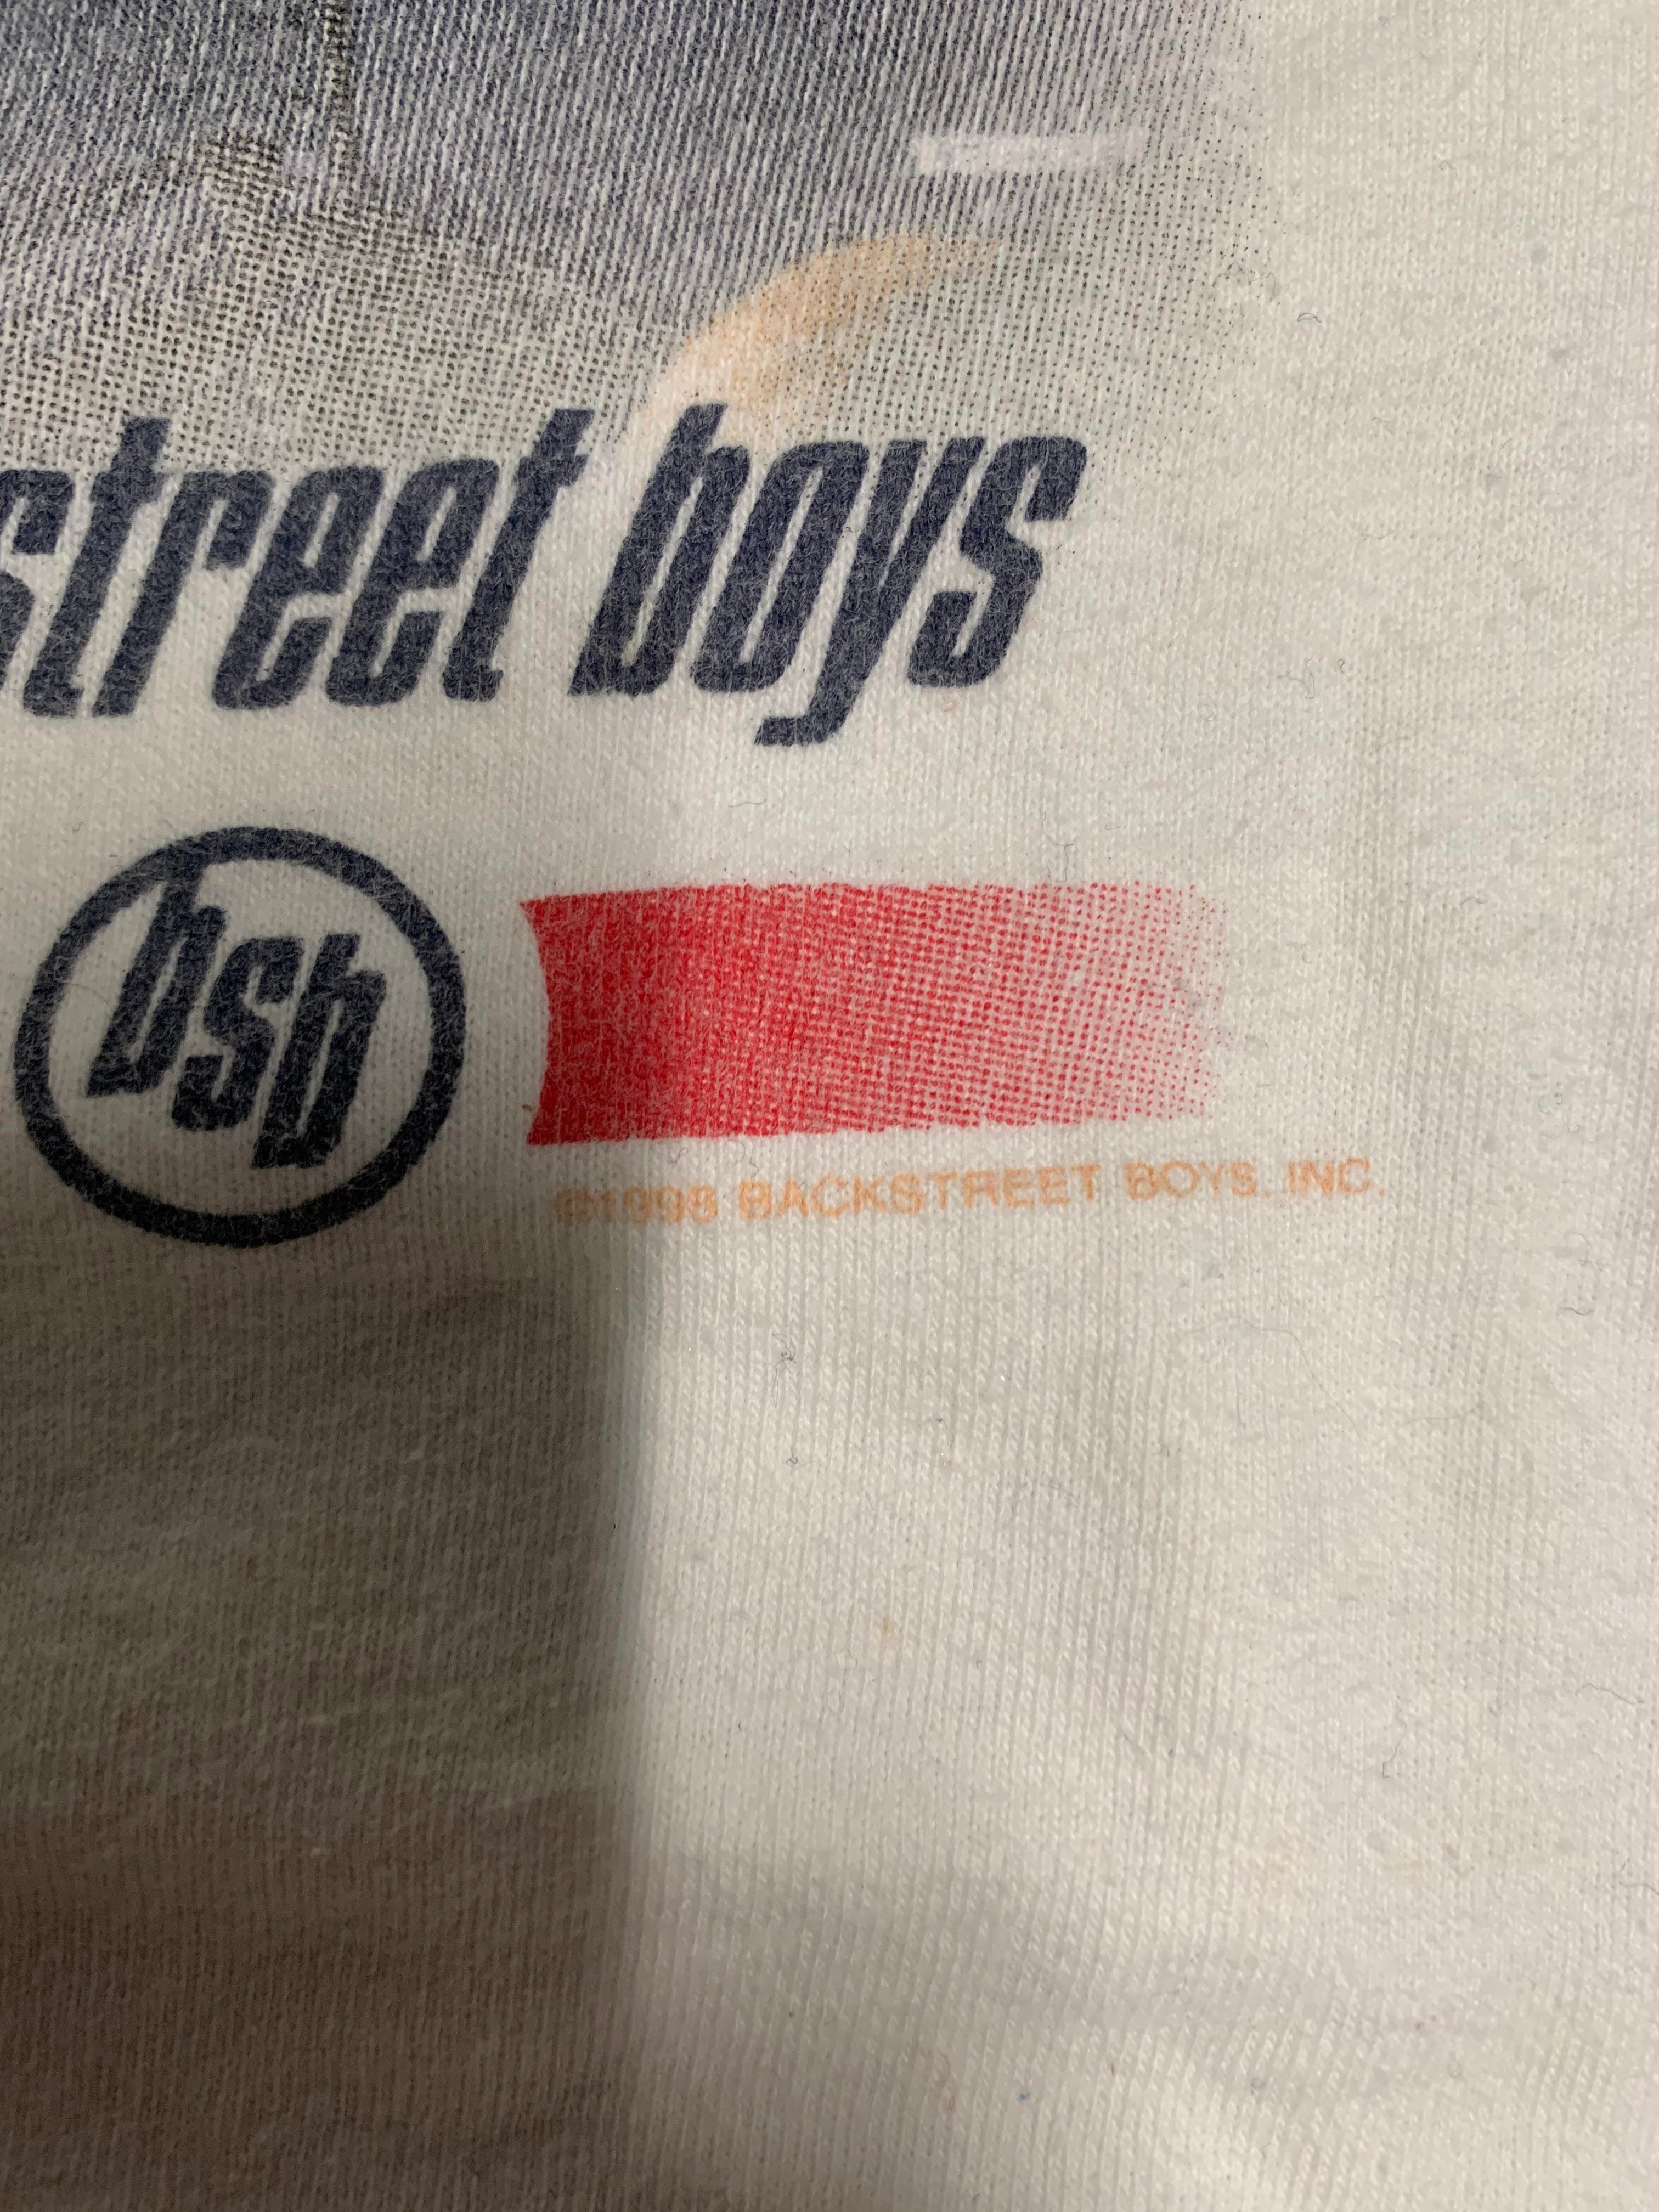 Backstreet Boys On Stage T-Shirt (1998), White (See Description), YXL